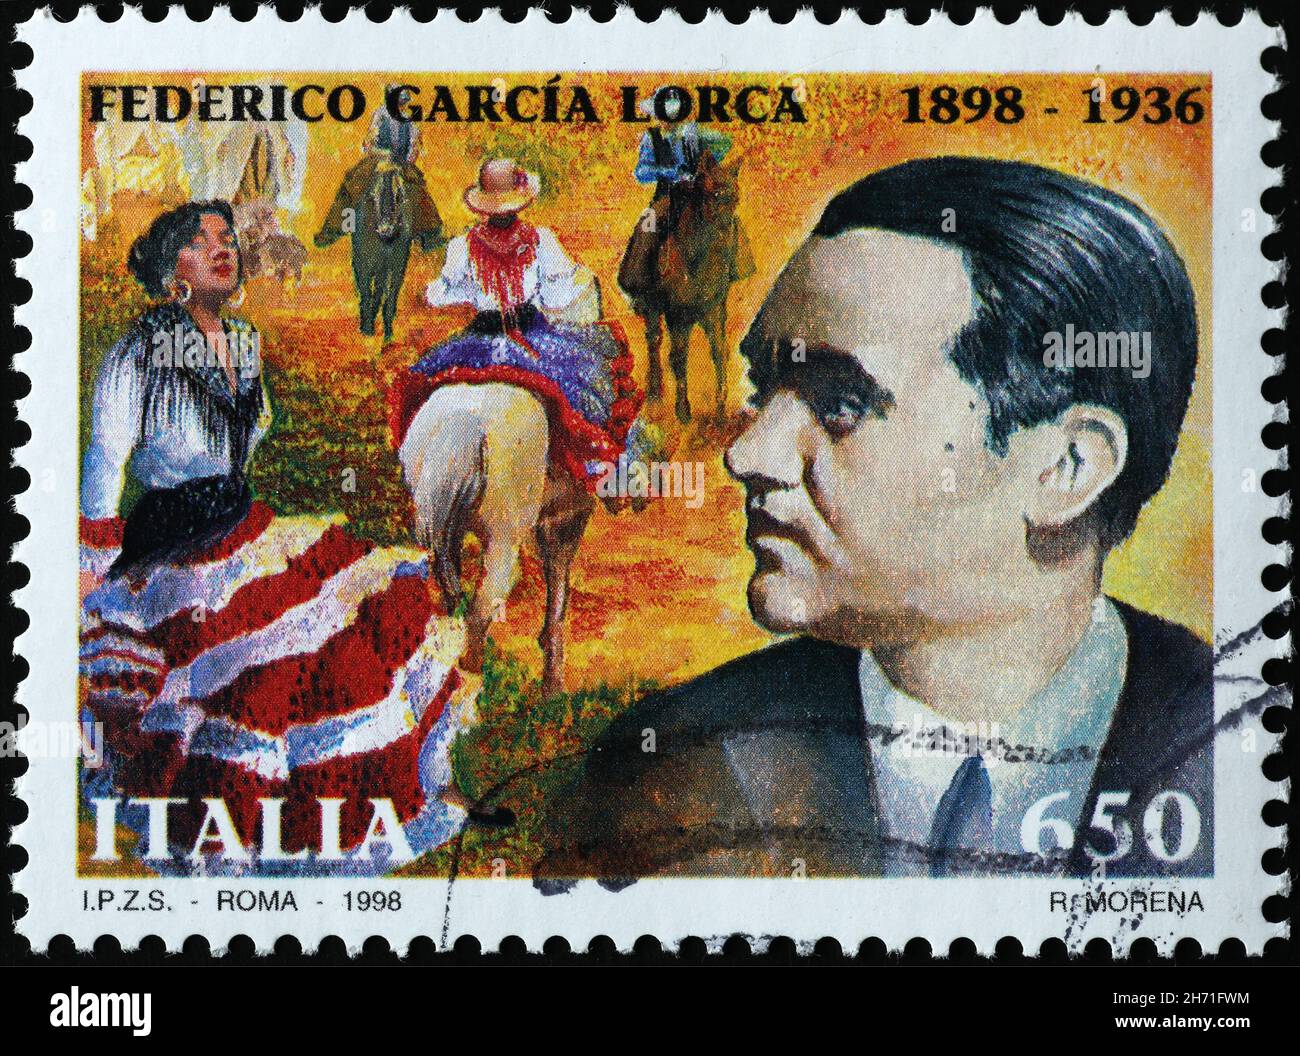 Federico Garcia Lorca on italian postage stamp Stock Photo